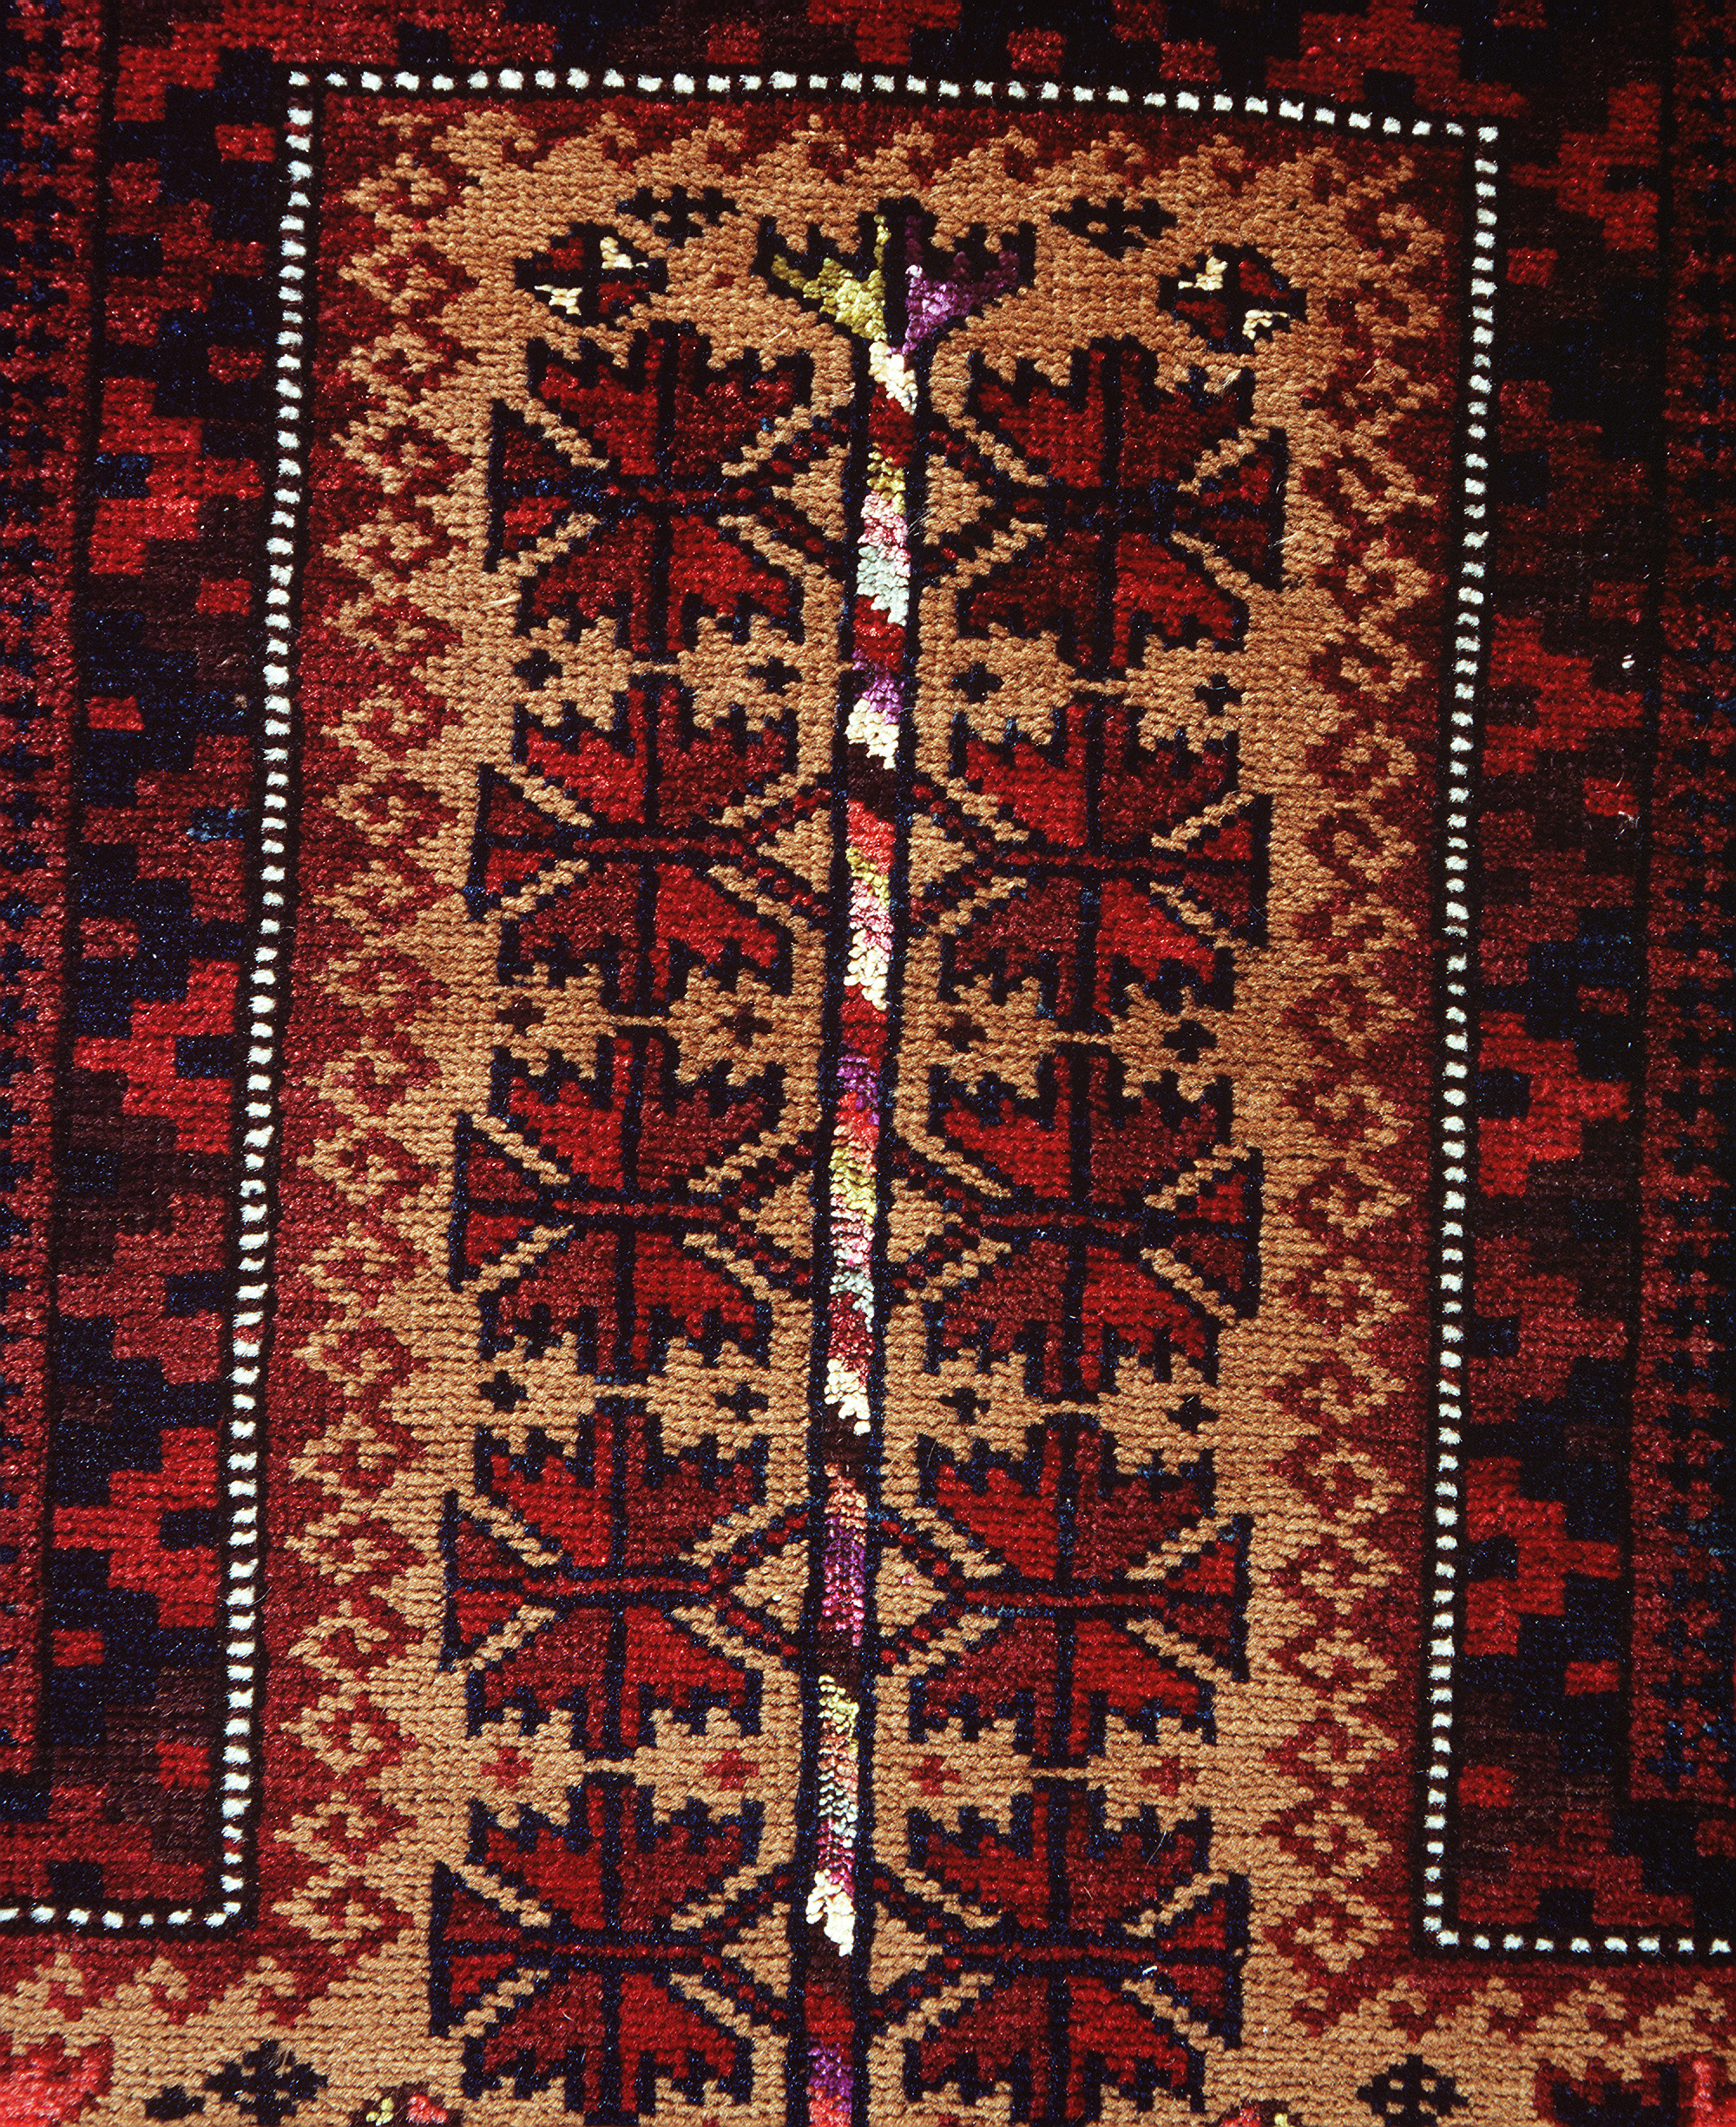 Baluchi prayer rug, northwest Afghanistan, late 1800s